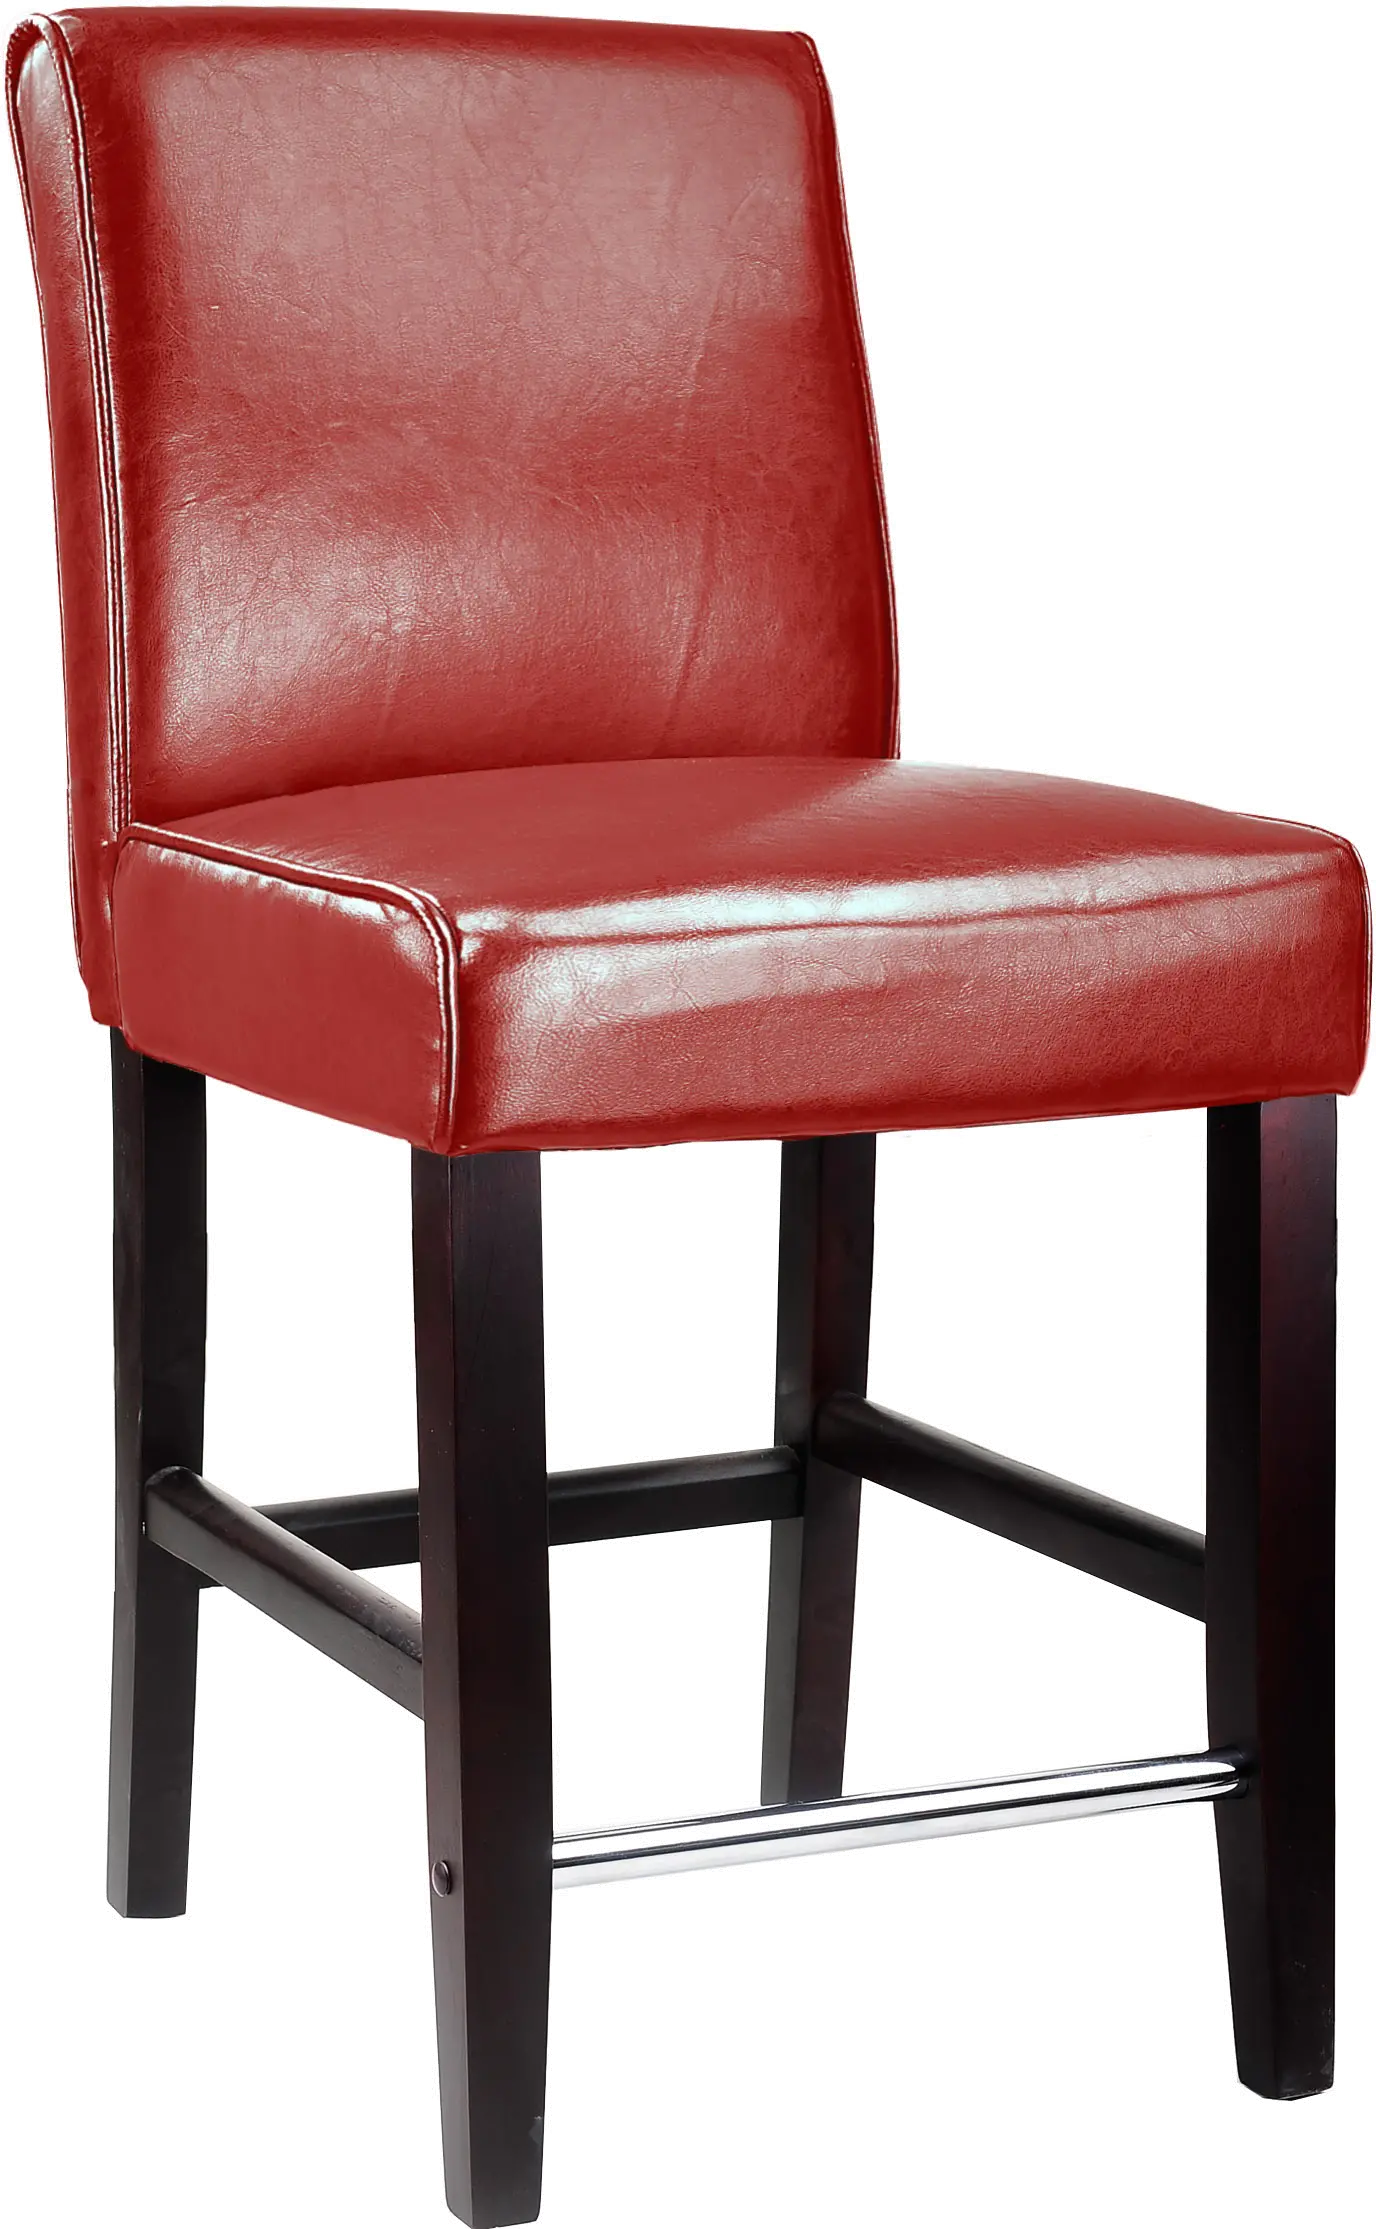 DAD-554-B Antonio Red Upholstered Counter Height Stool sku DAD-554-B